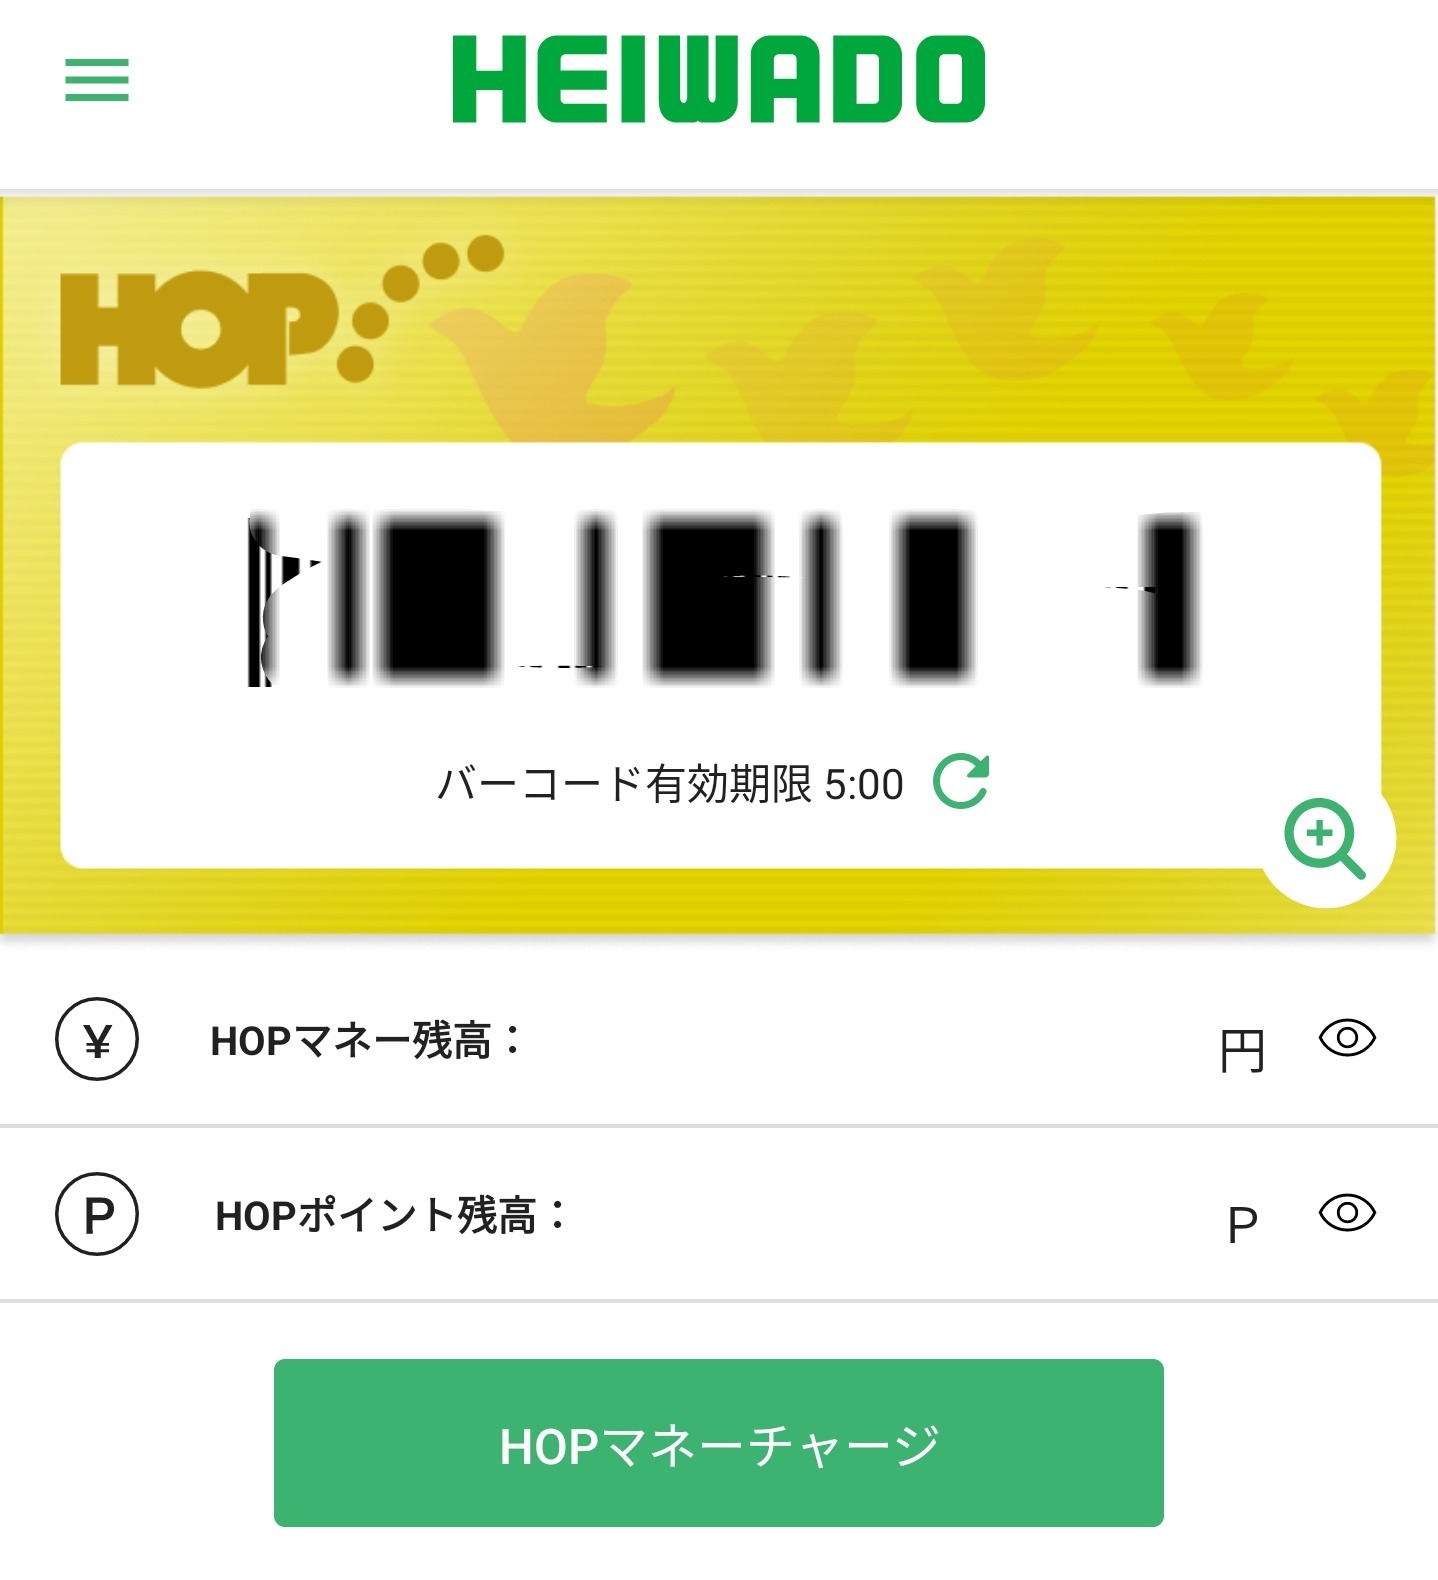 HEIWADO HOPアプリ、システム障害から復旧のお知らせの画像